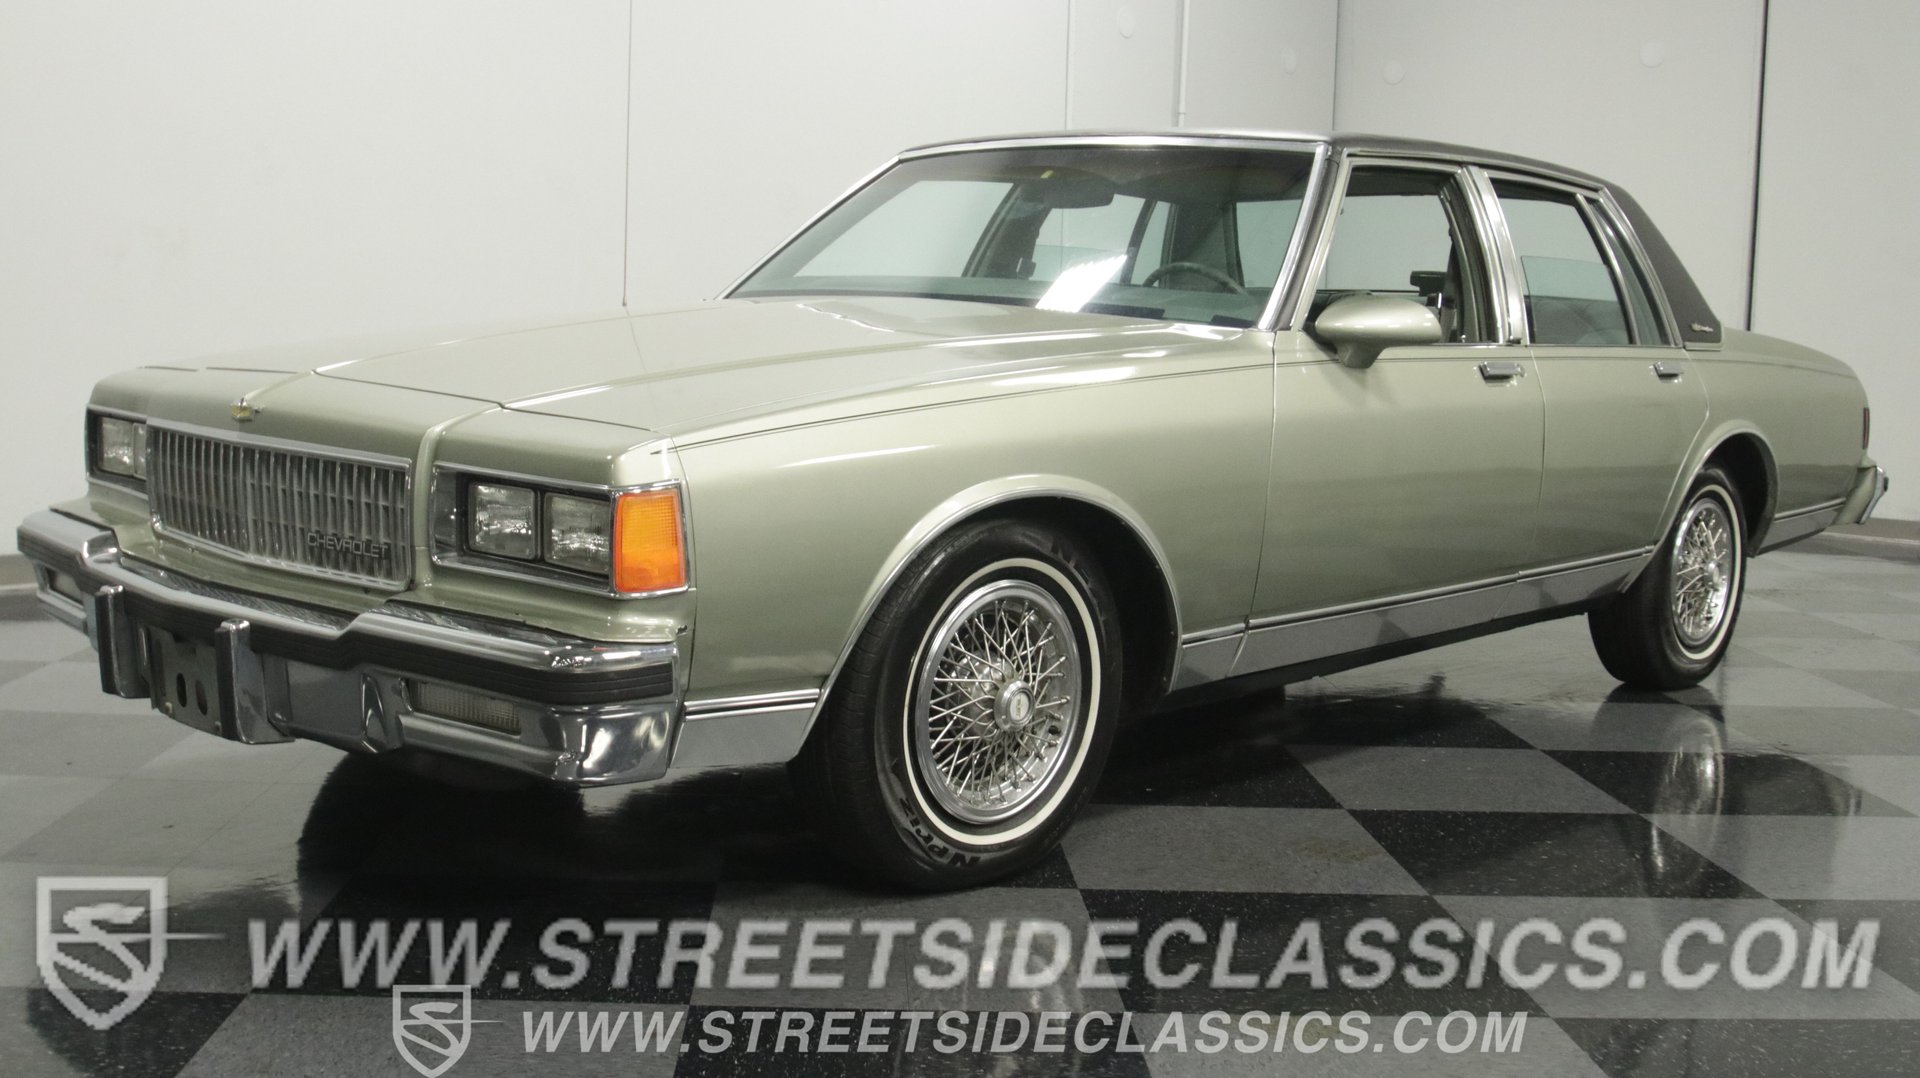 1986 Chevrolet Caprice | Classic Cars for Sale - Streetside Classics